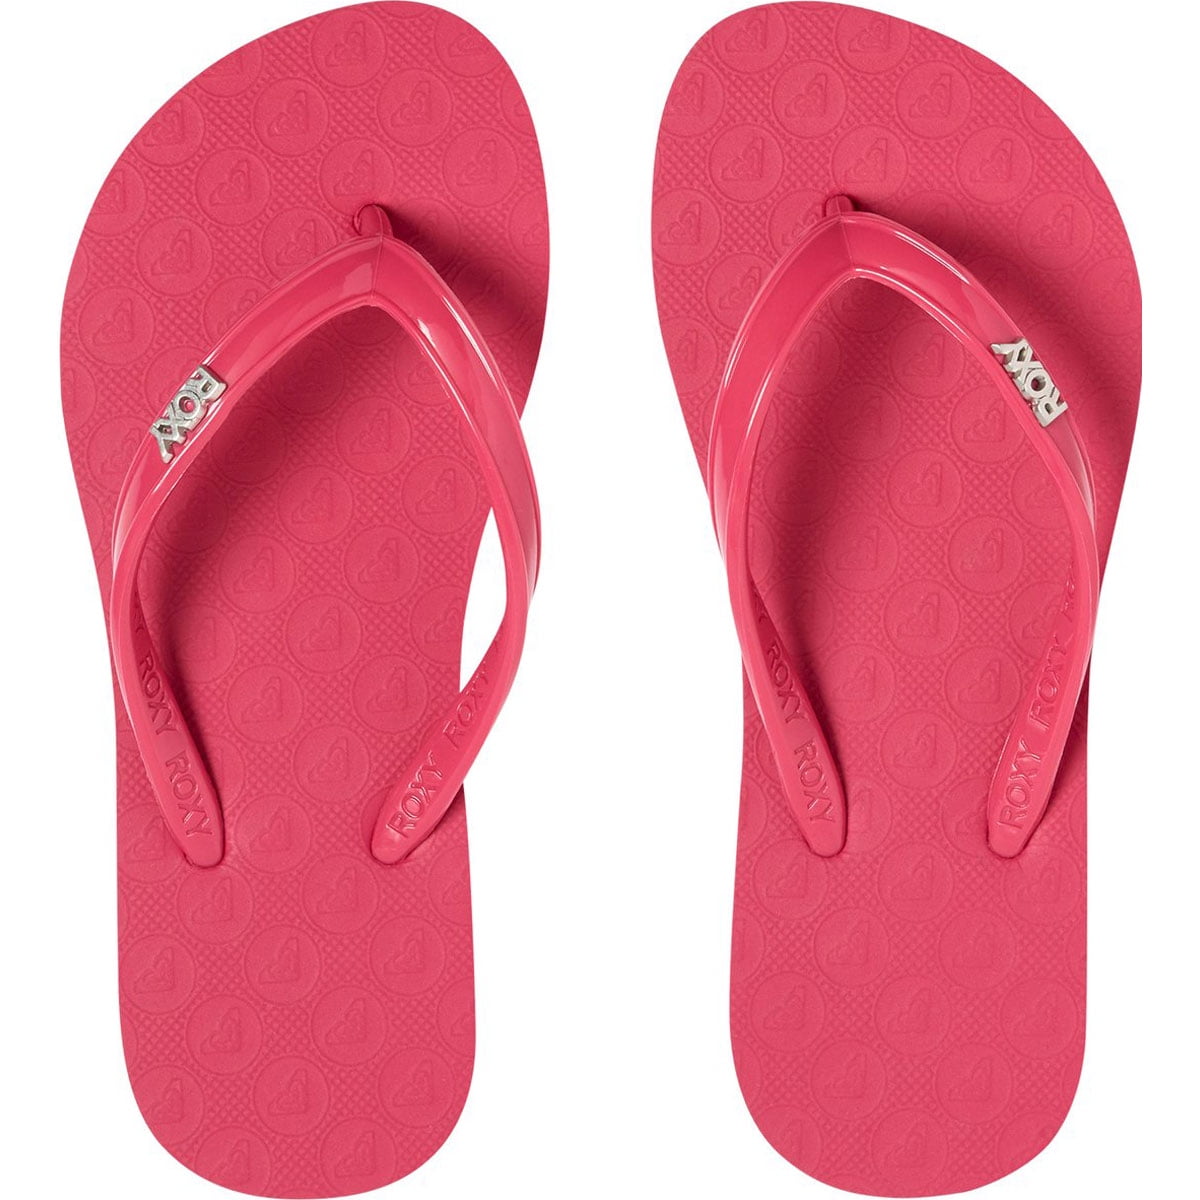 roxy pink flip flops